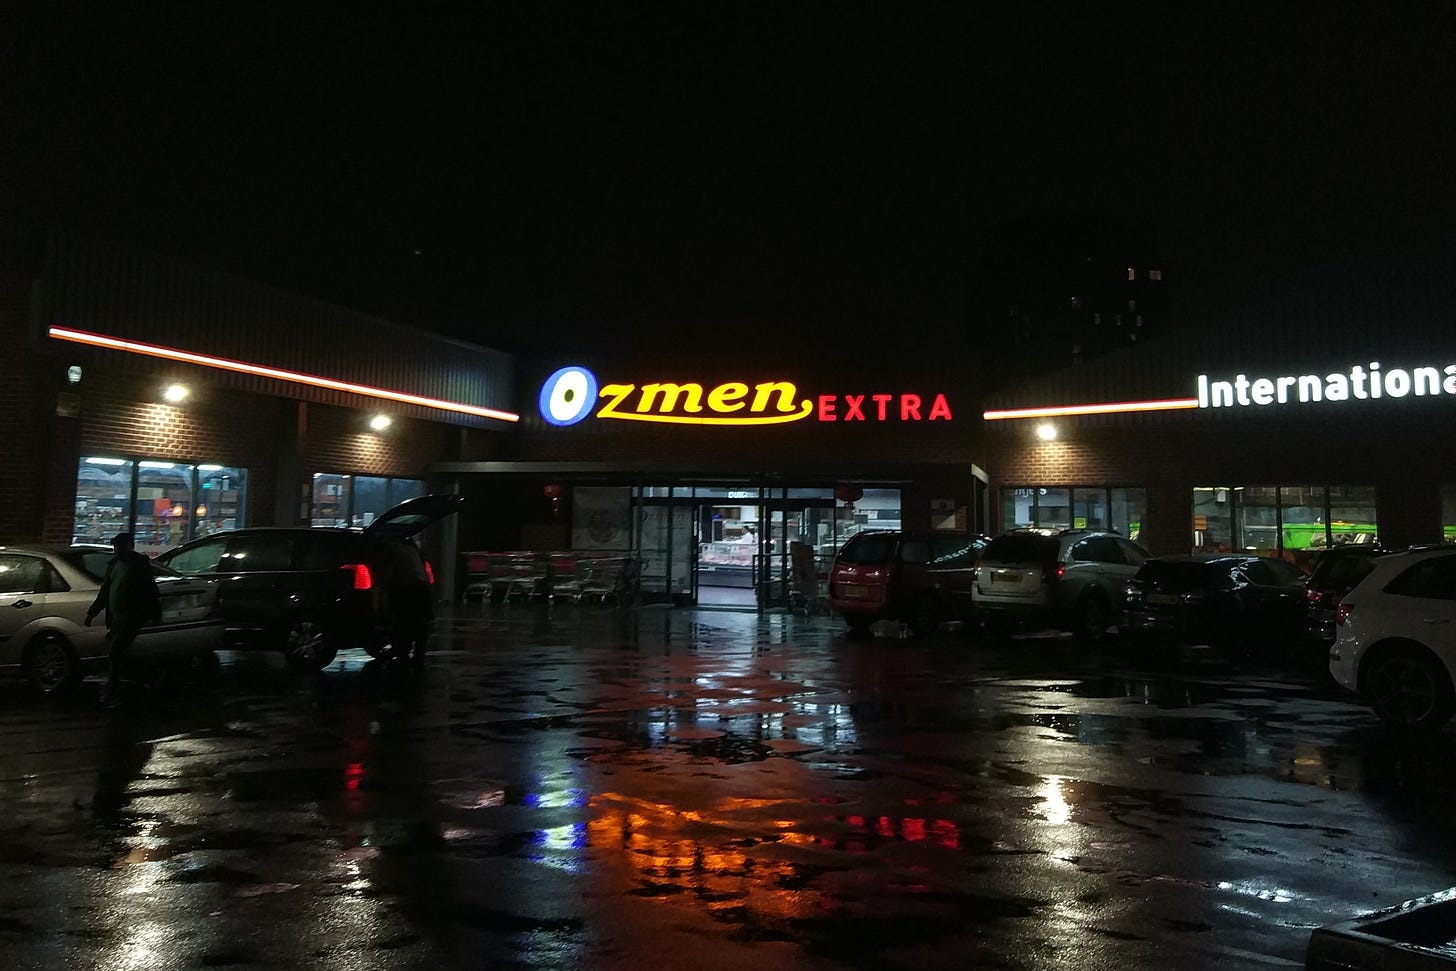 Sheffield-based international grocery store Ozmen, viewed at night 